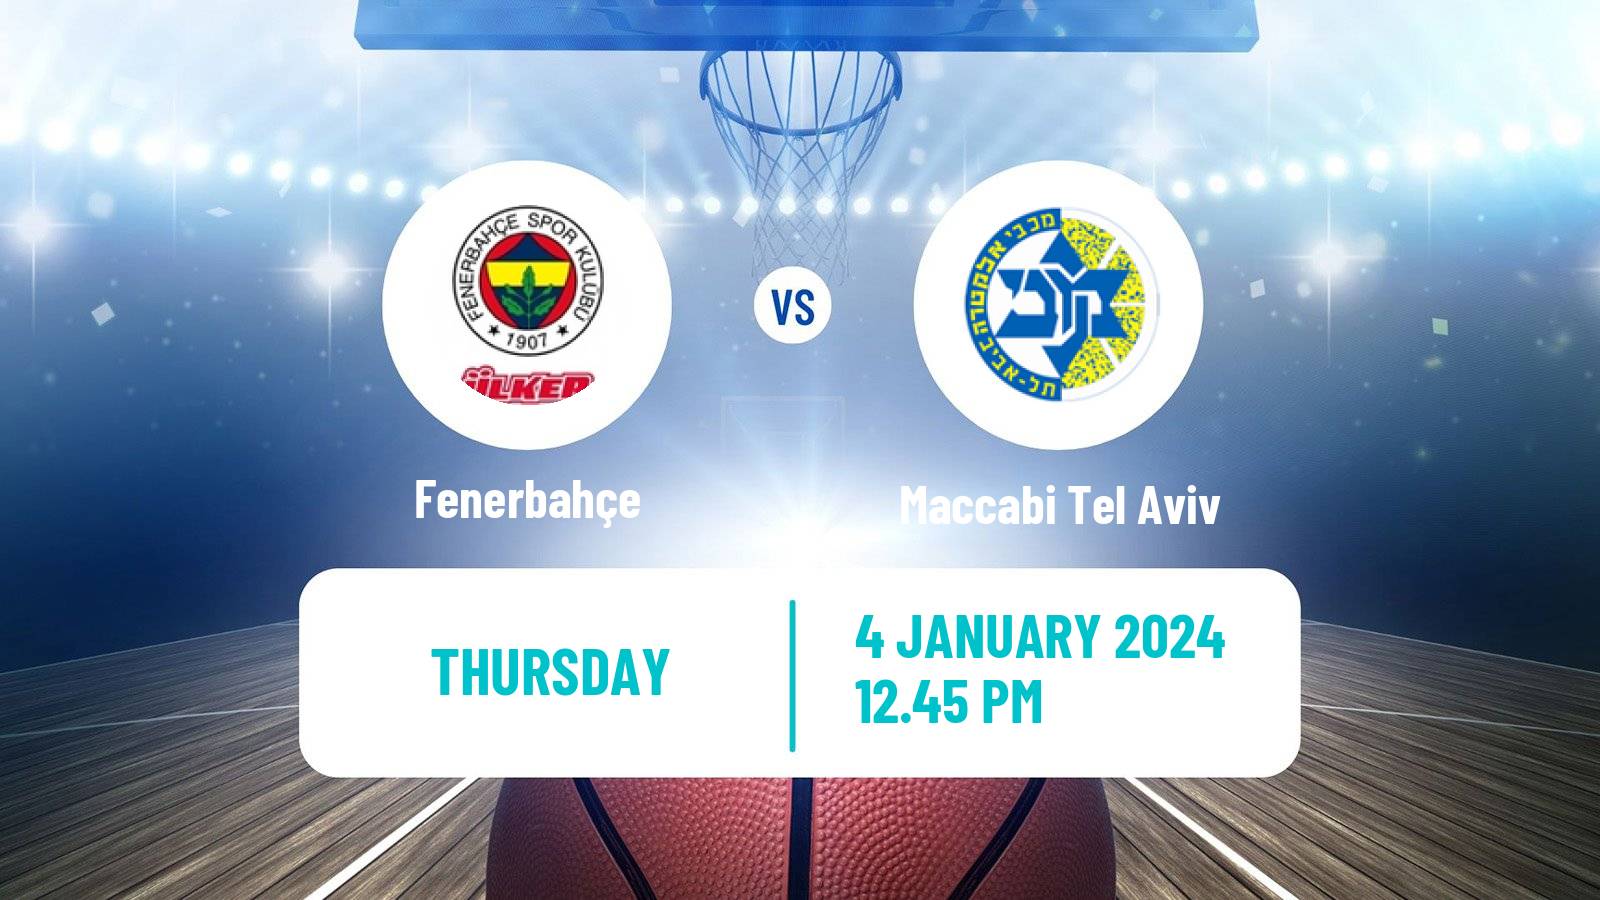 Basketball Euroleague Fenerbahçe - Maccabi Tel Aviv